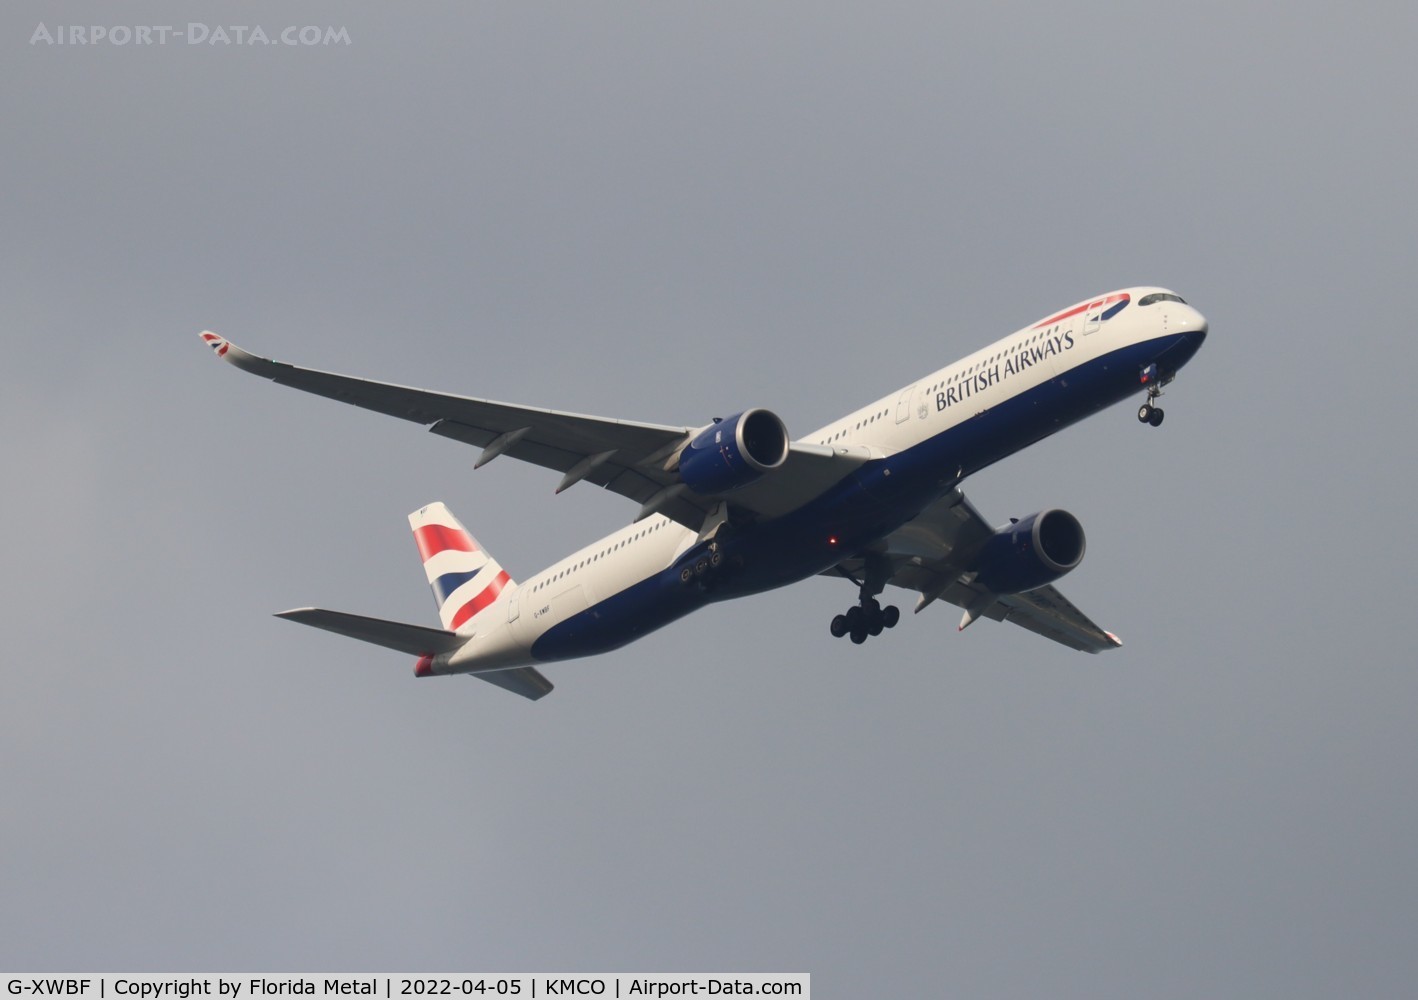 G-XWBF, 2019 Airbus A350-1041 C/N 402, British Airways